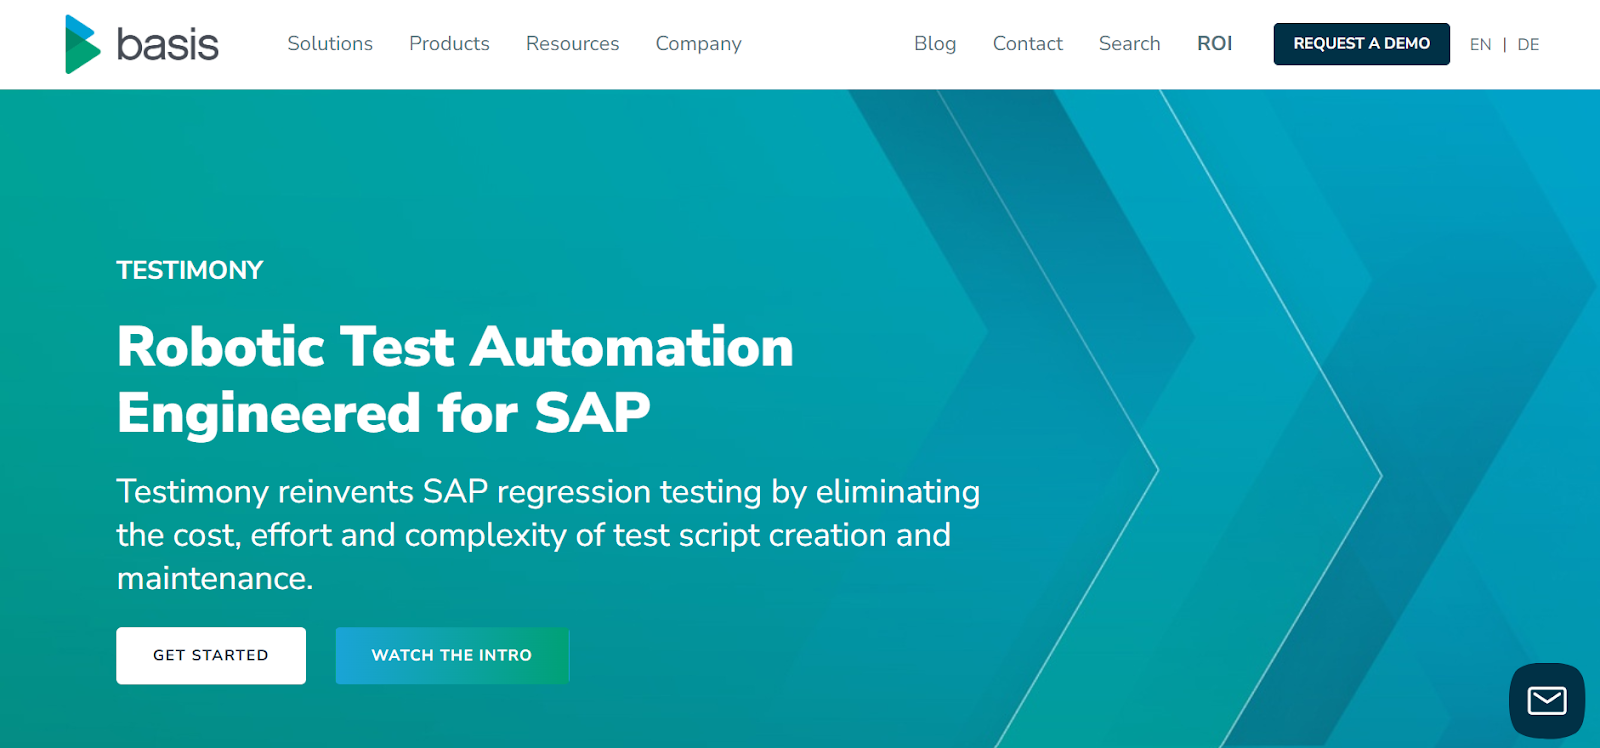 SAP testing tools - Testimony